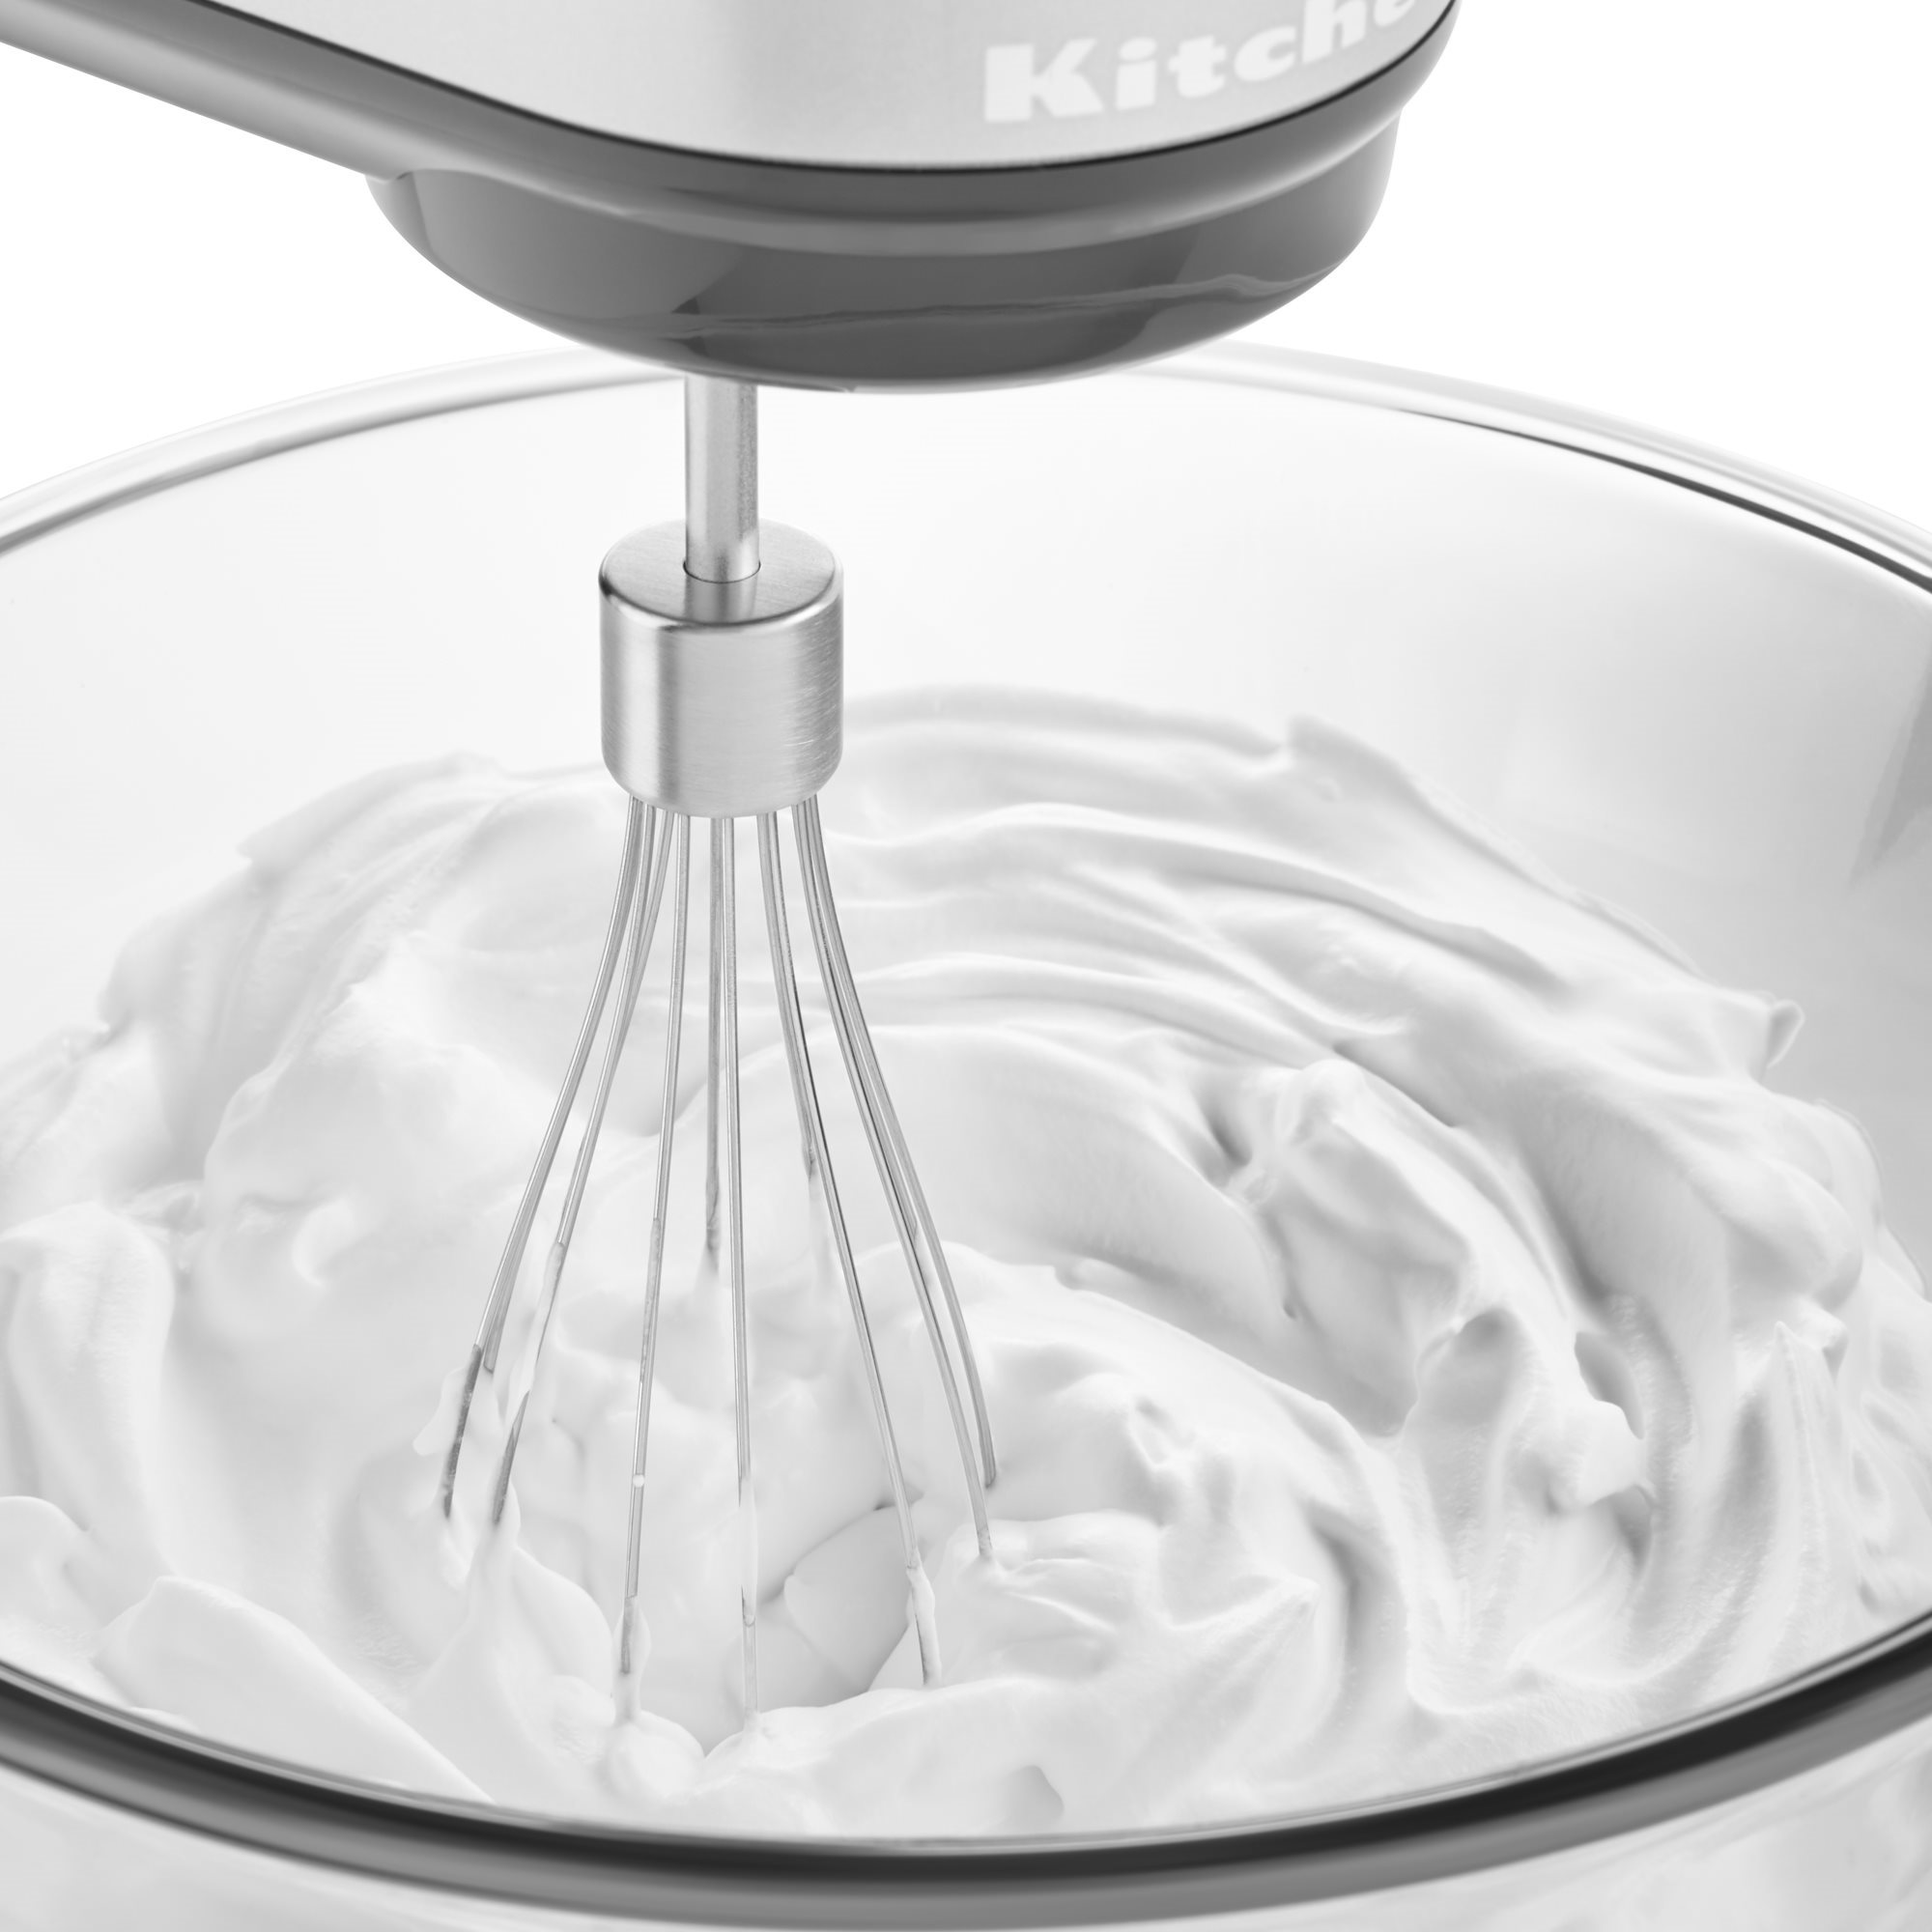 KitchenAid 6 Speed Hand Mixer - White 